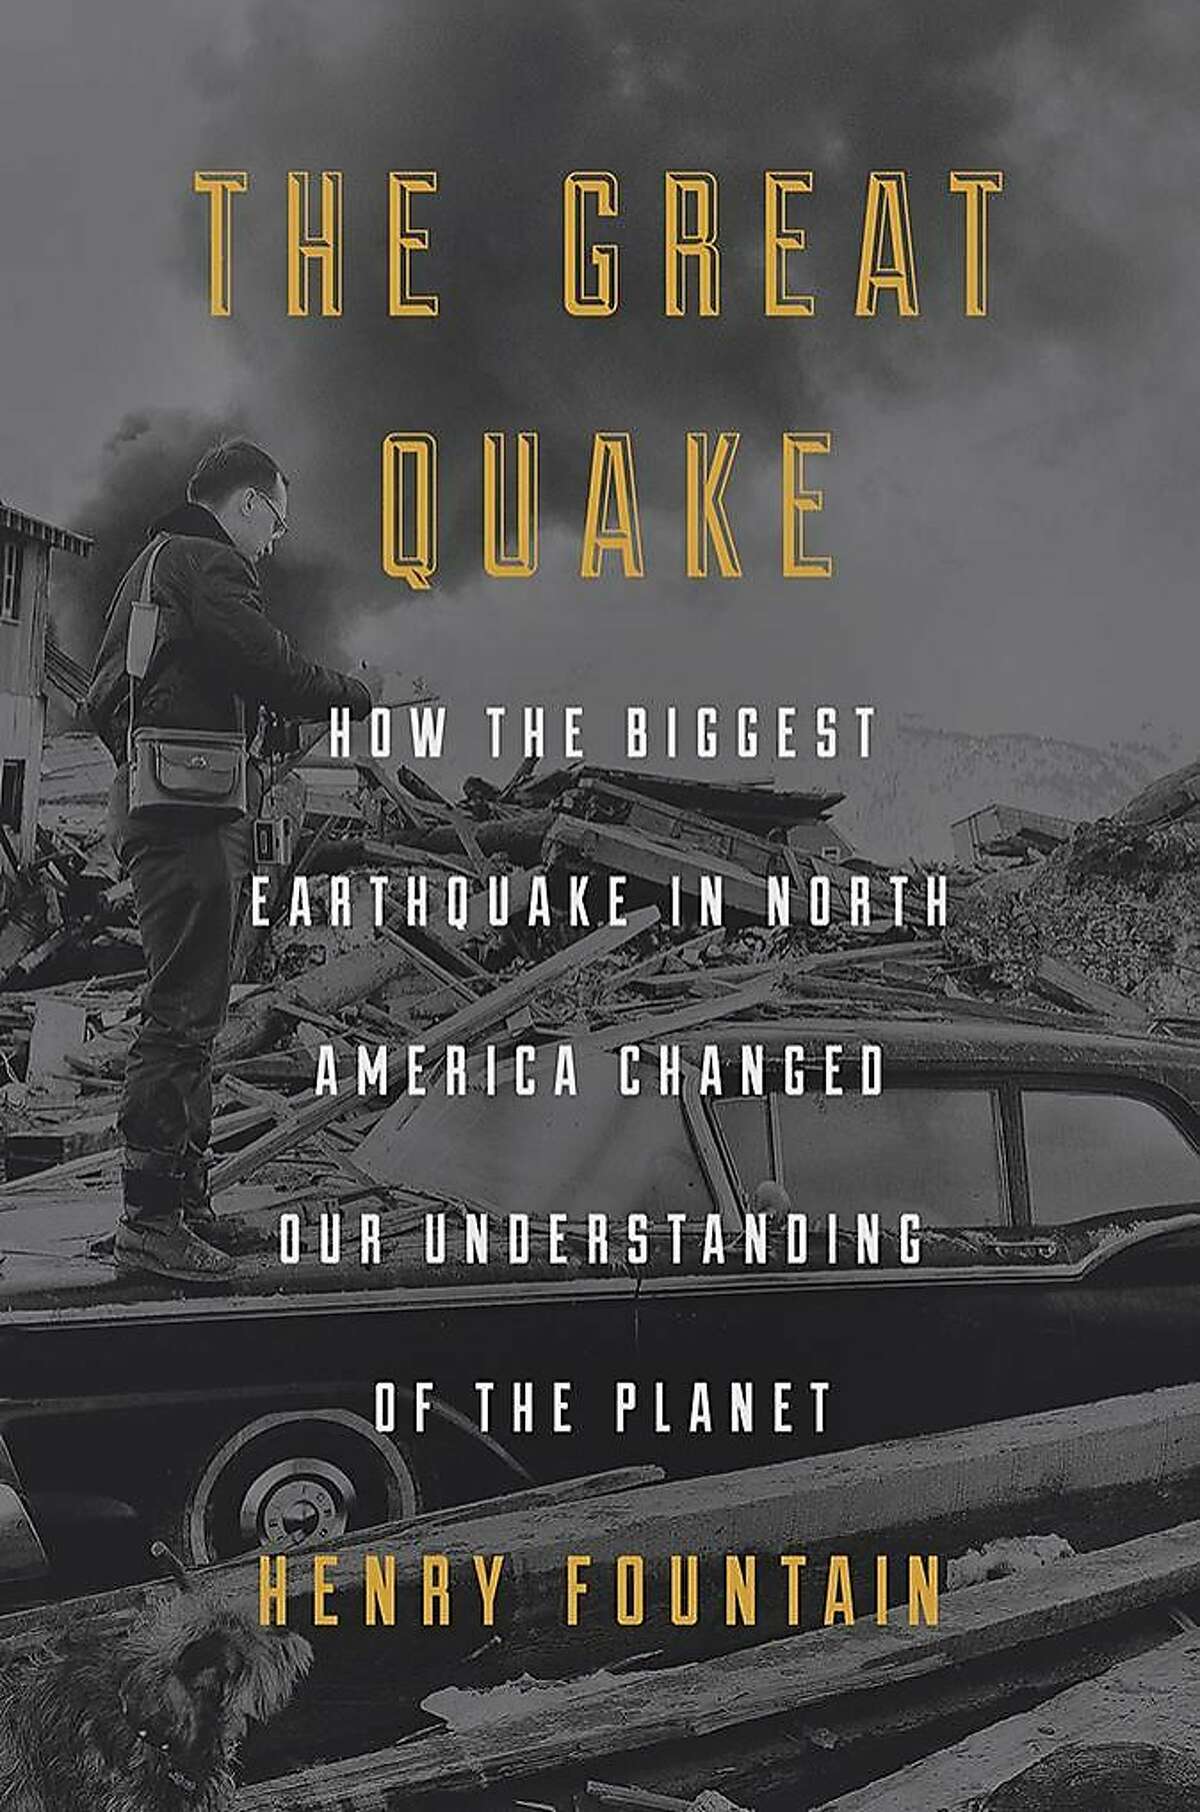 "The Great Quake"